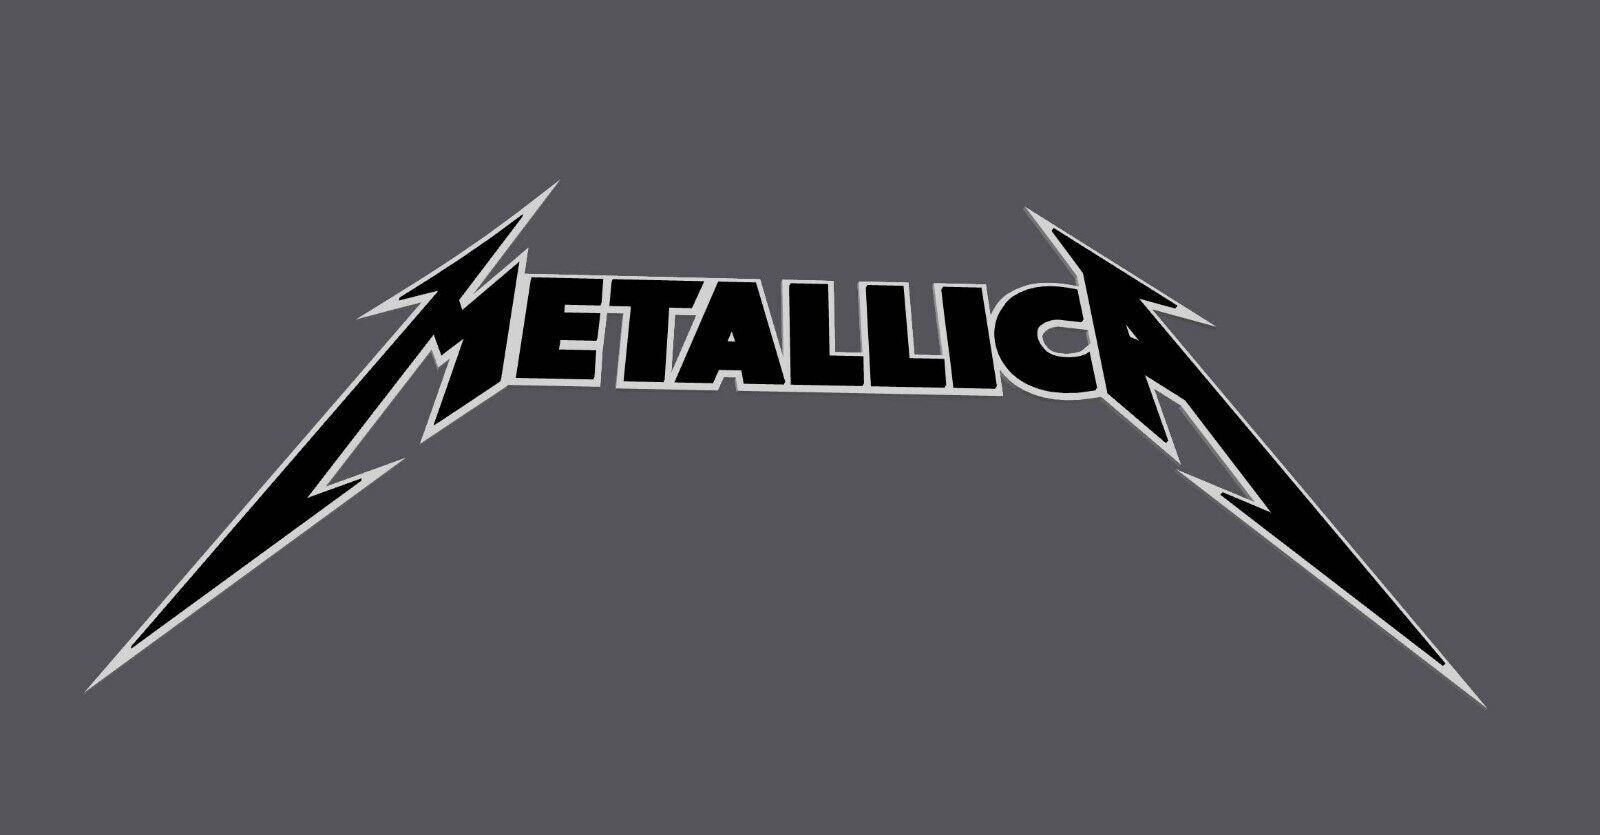 Metallica inspired 3D Printed Logo, Wall Art, Man Cave, Music Lovers 9.5